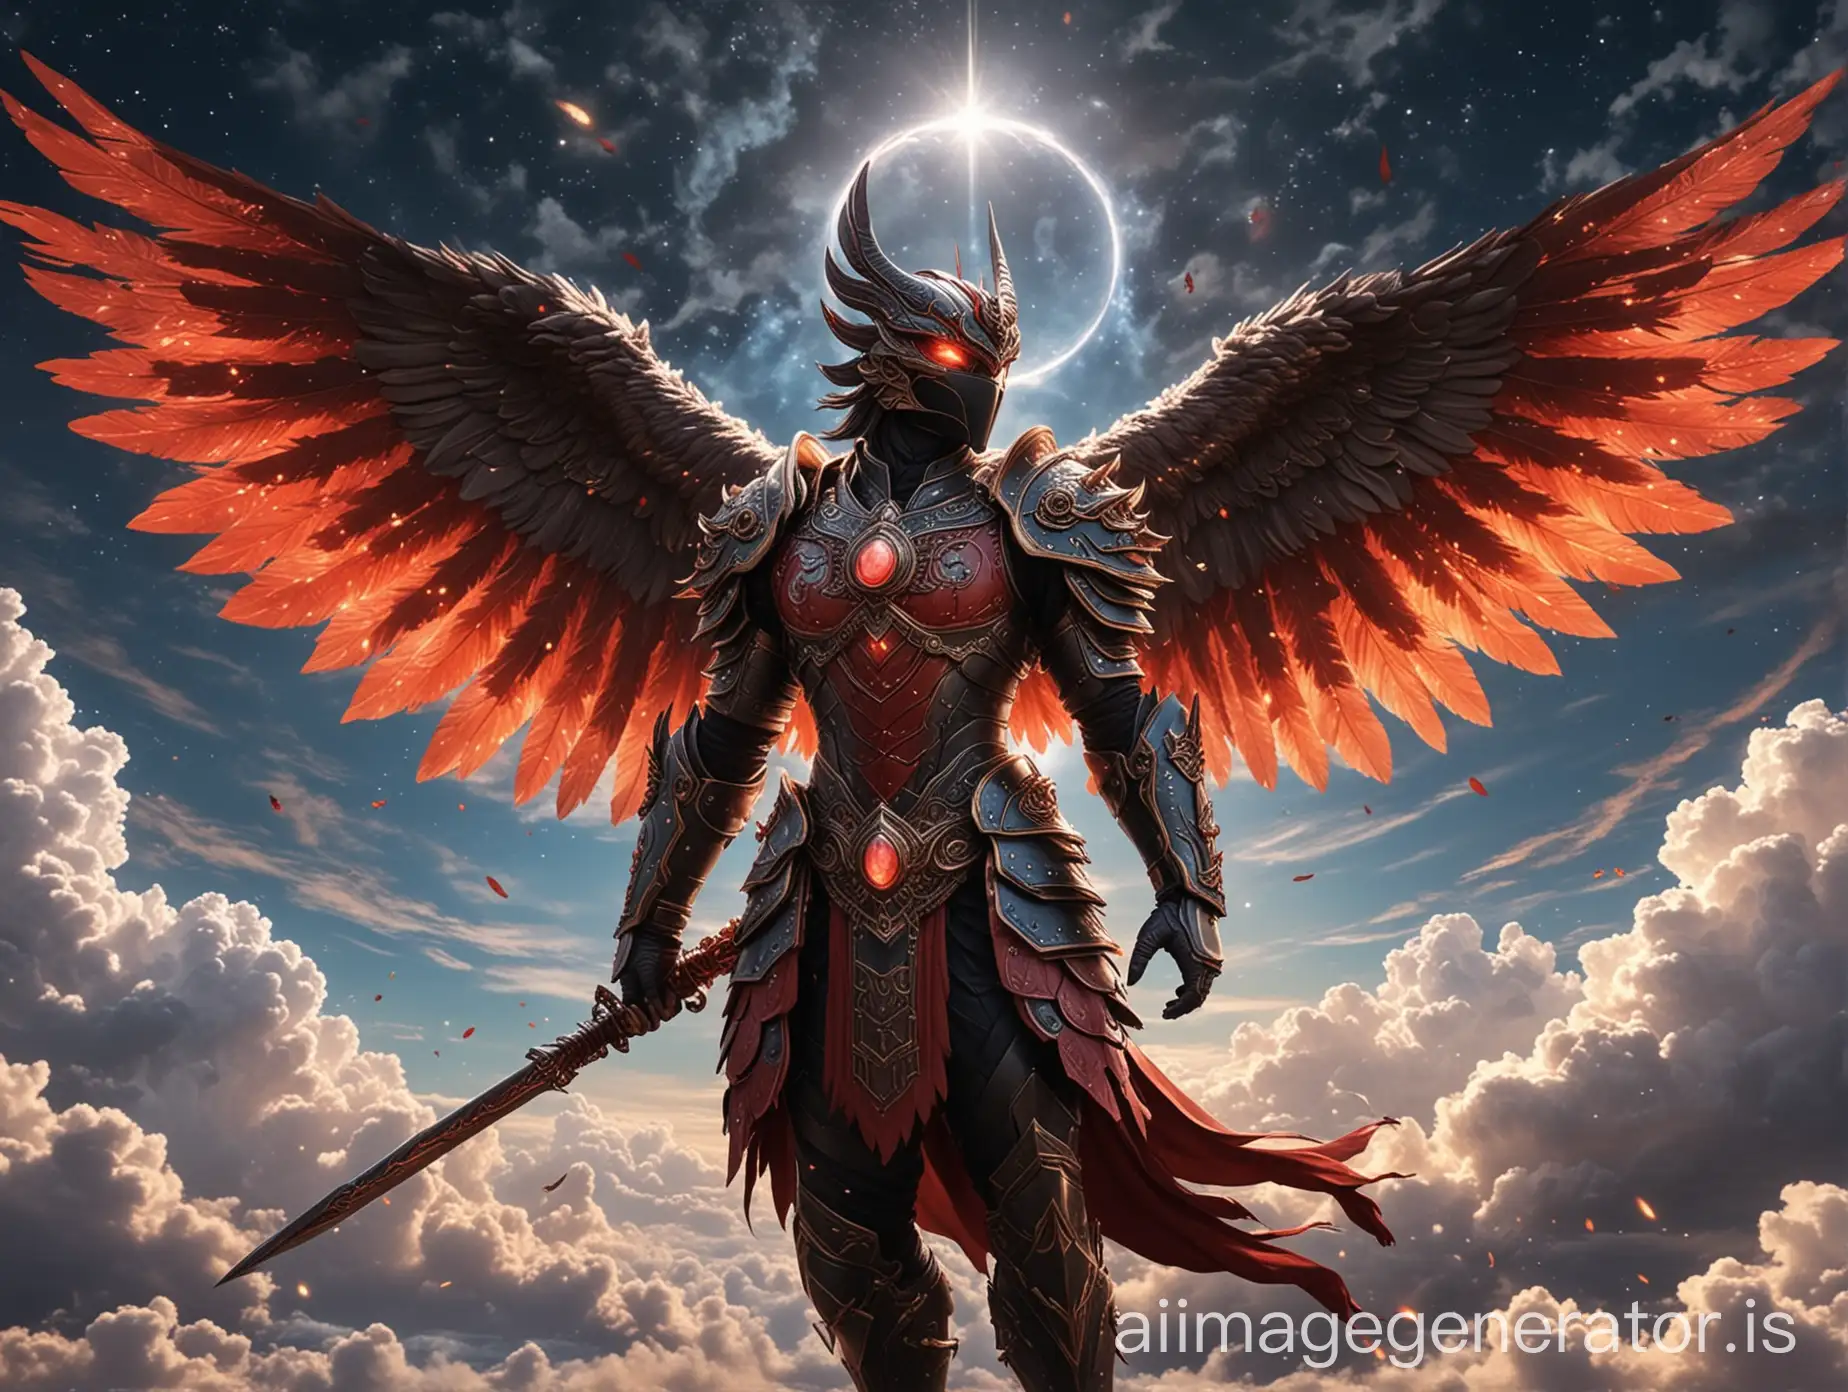 Celestial-Garuda-Anime-Art-Radiant-Cosmic-Creature-Flying-with-Spear